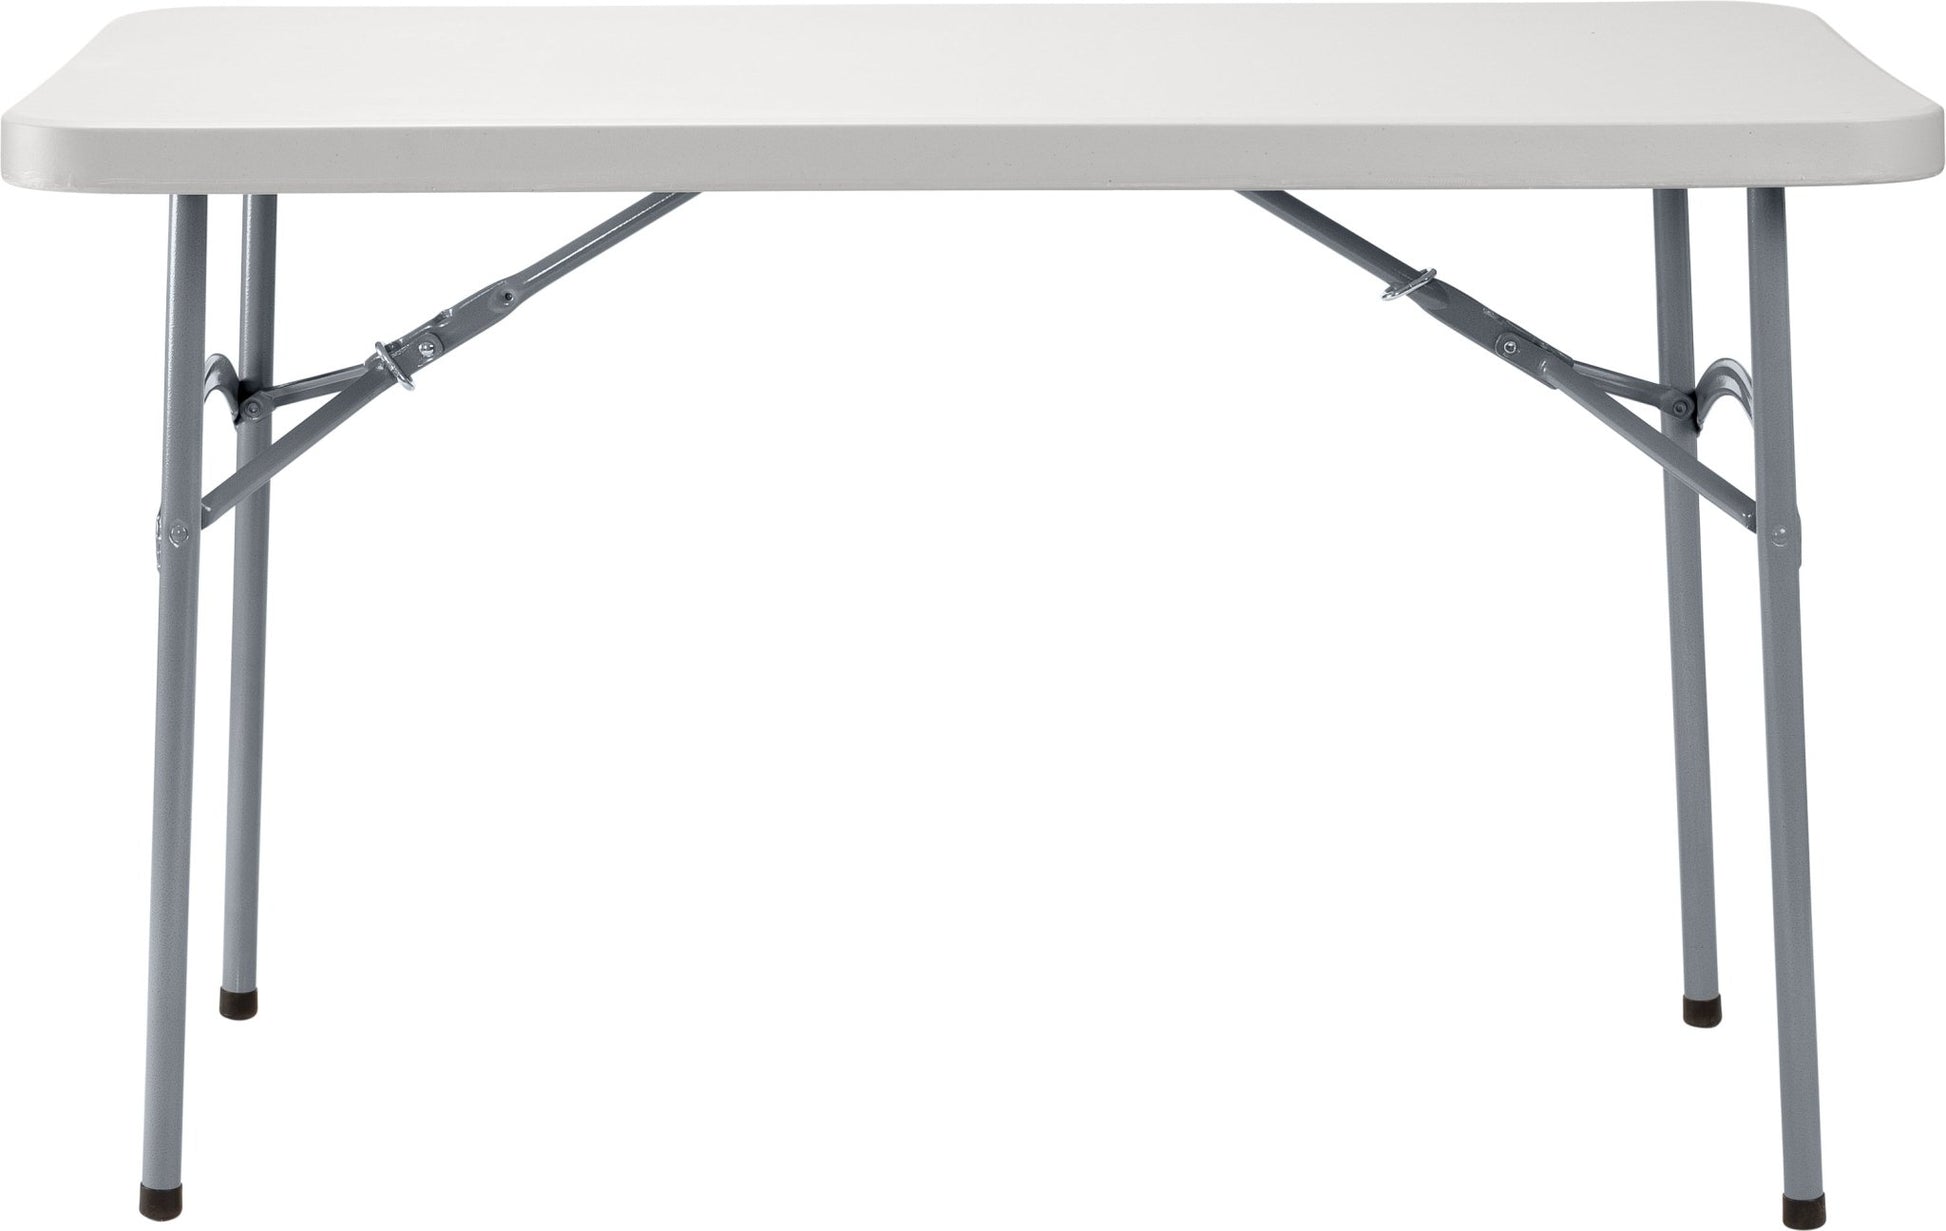 NPS 24" x 48" Heavy Duty Folding Table, Speckled Gray (National Public Seating NPS-BT2448) - SchoolOutlet